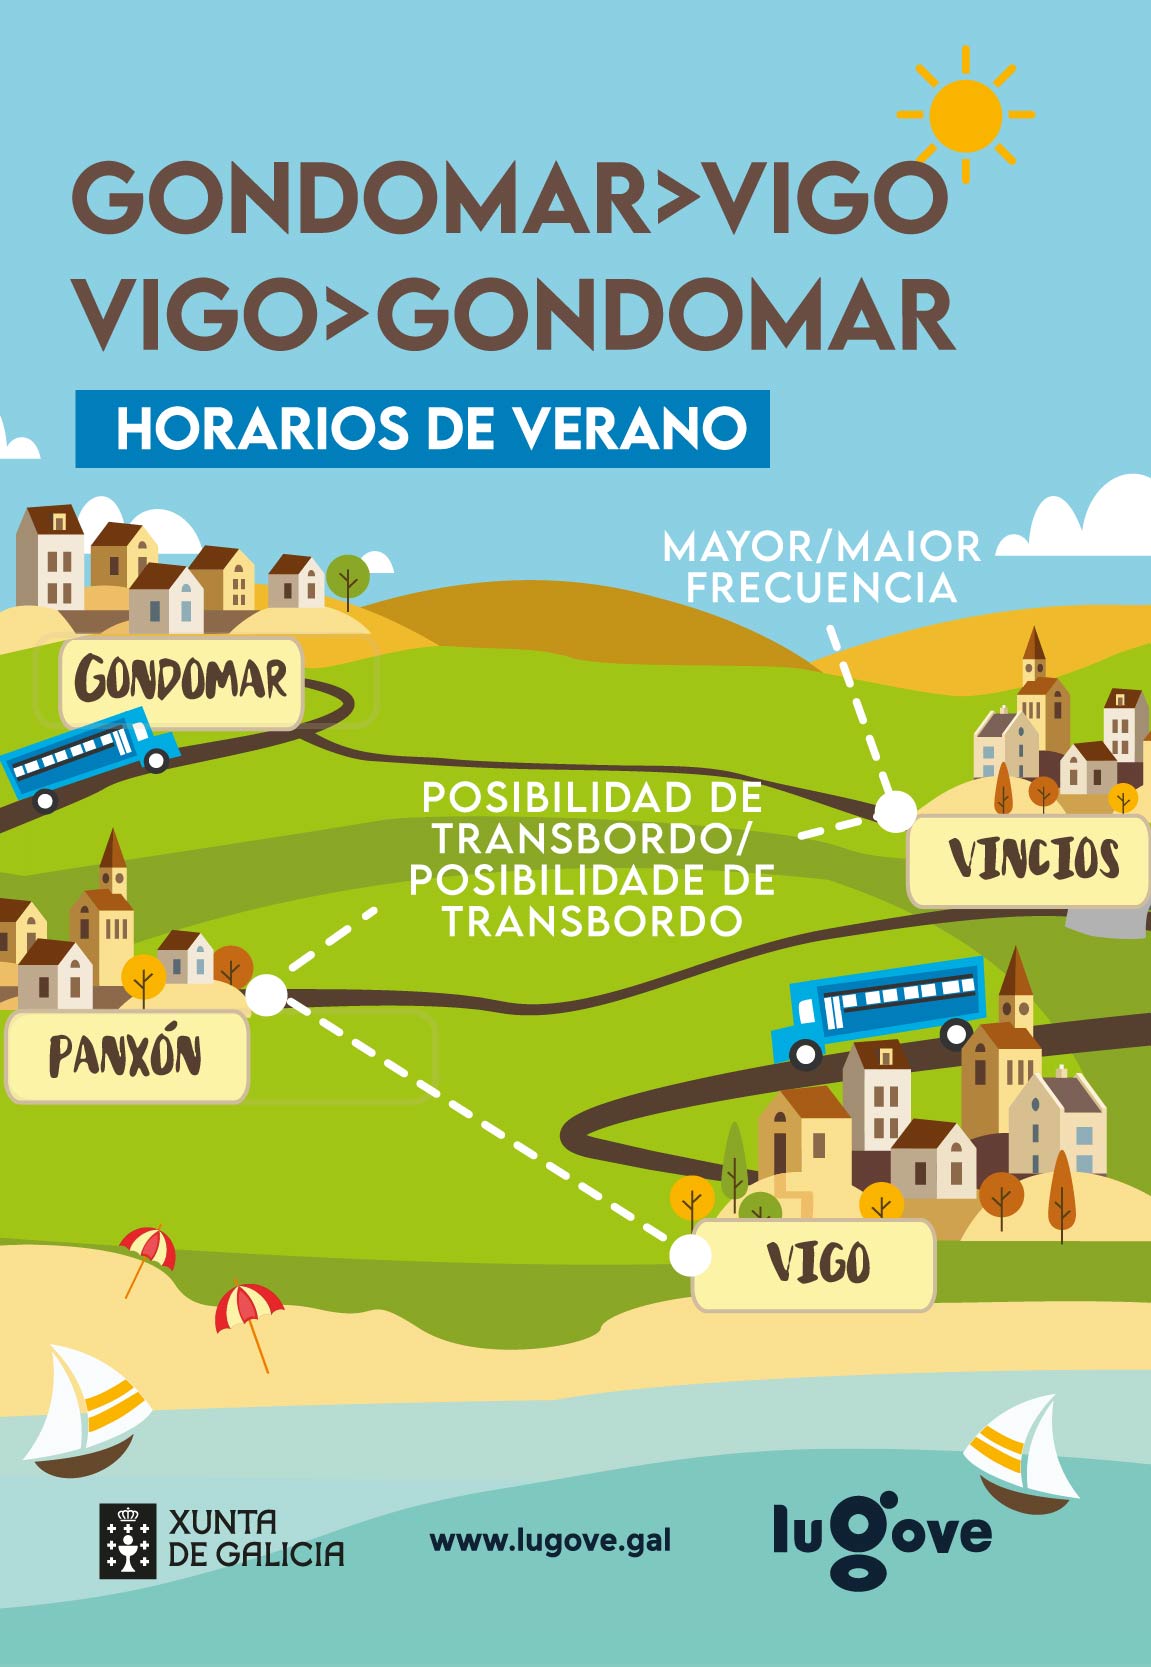 Trayecto_Gondomar_Vigo